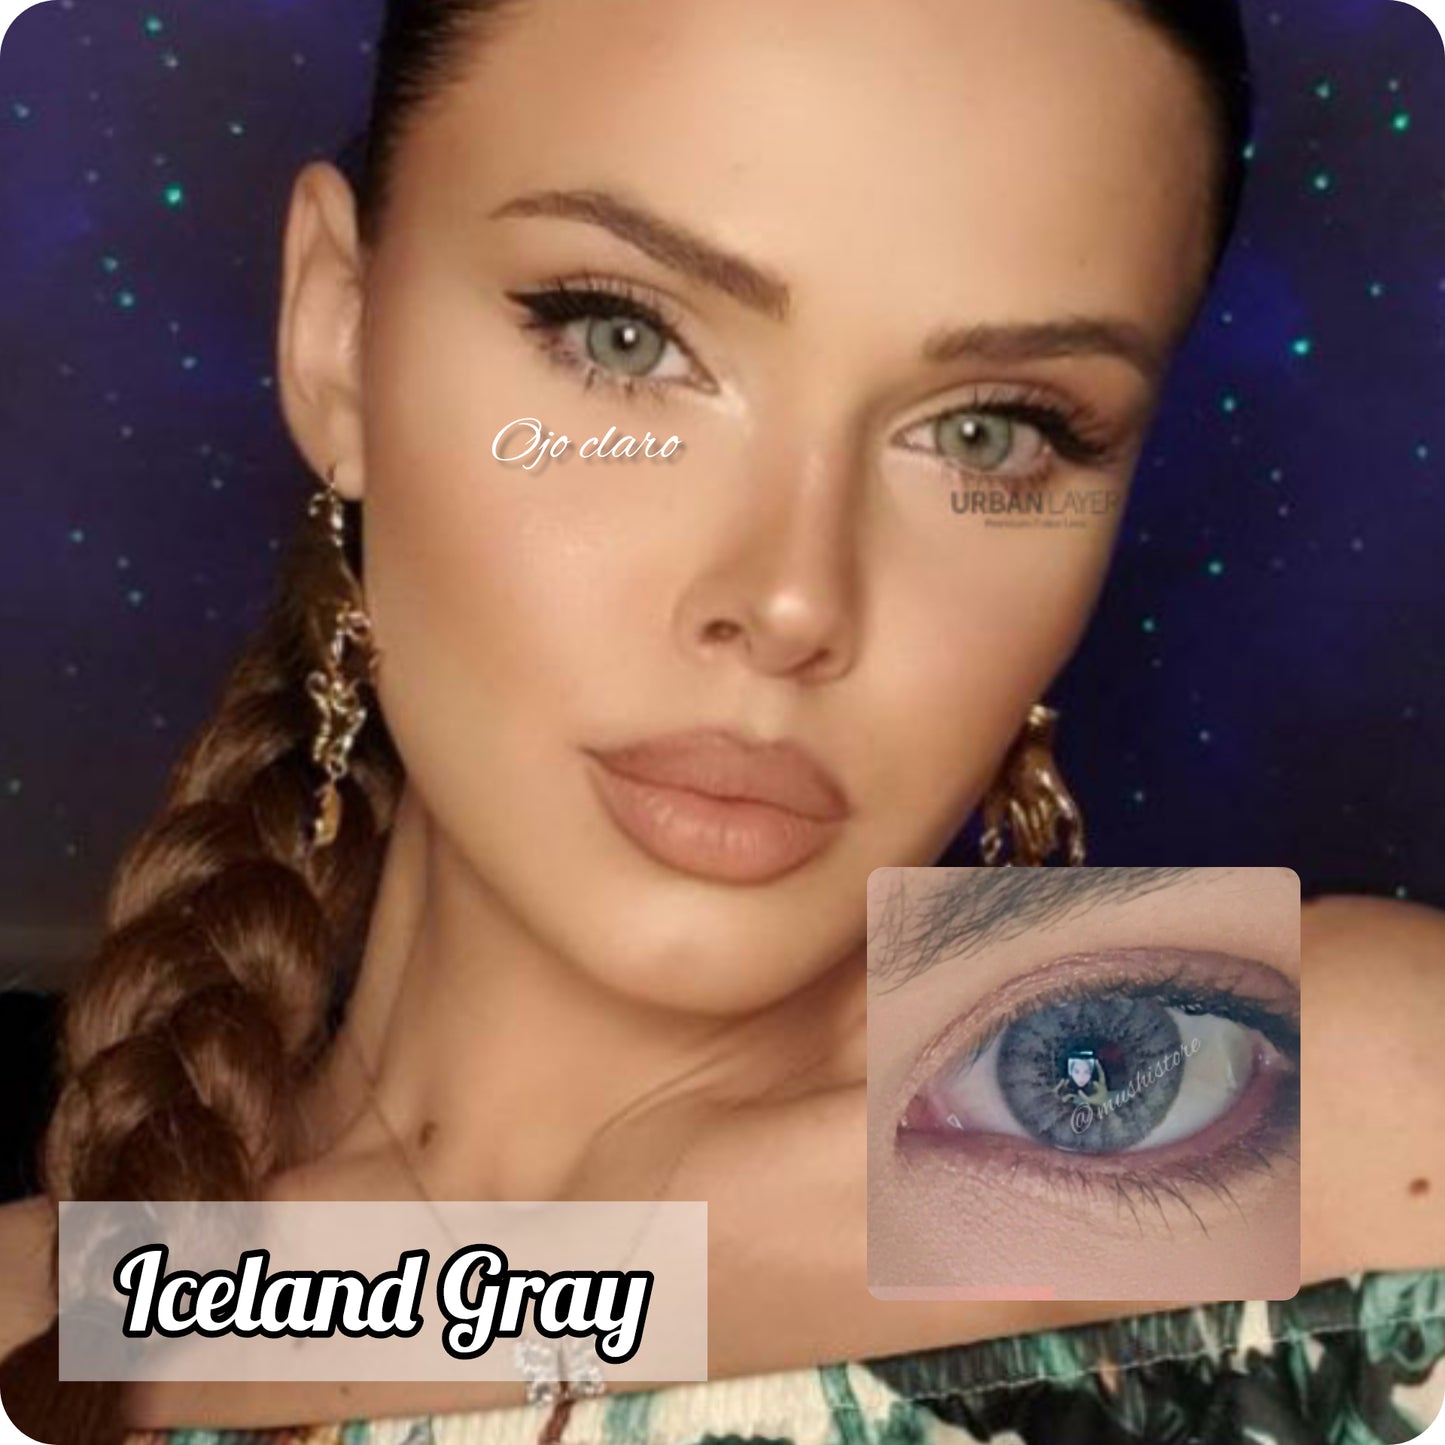 Iceland Gray